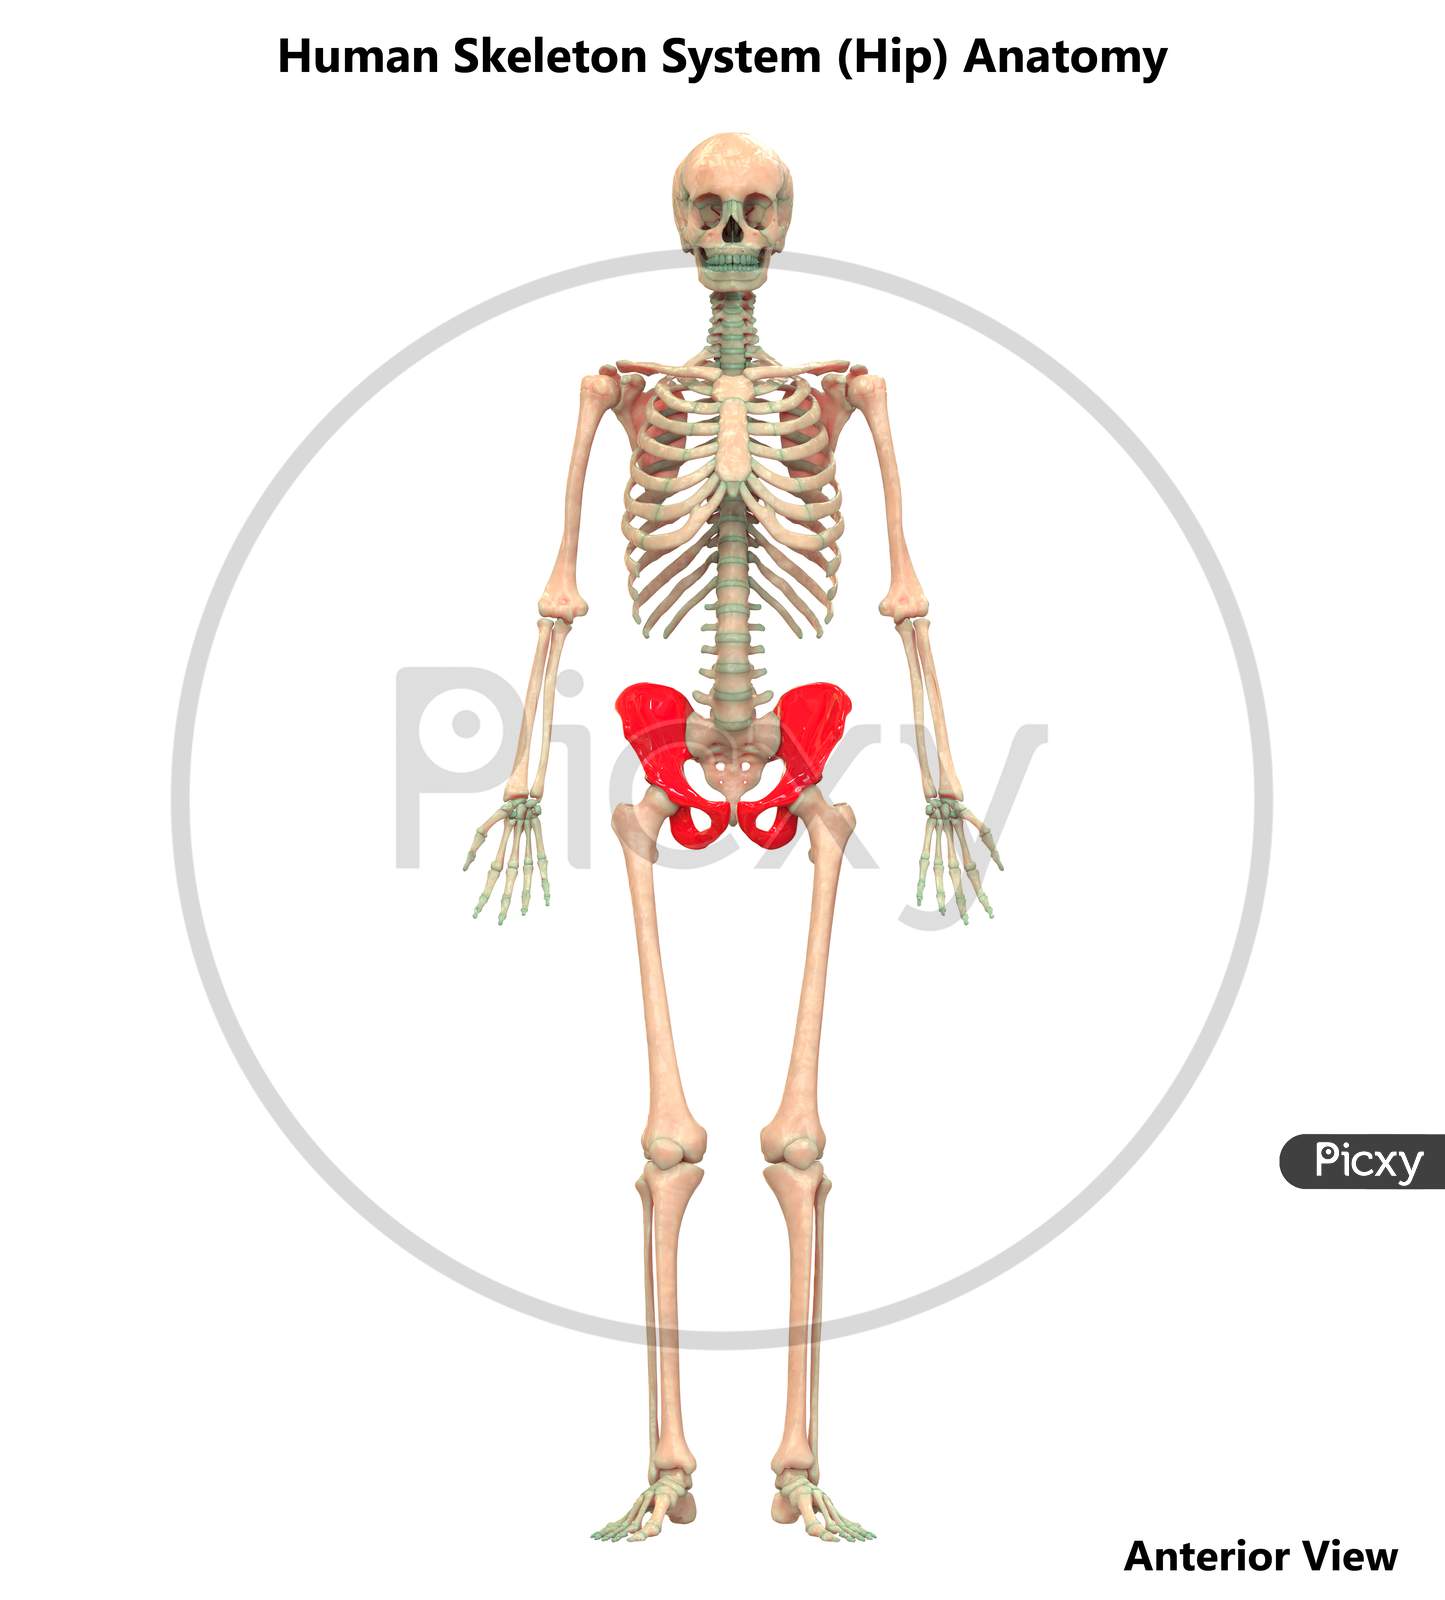 Human Skeleton System Anatomy (Hip)